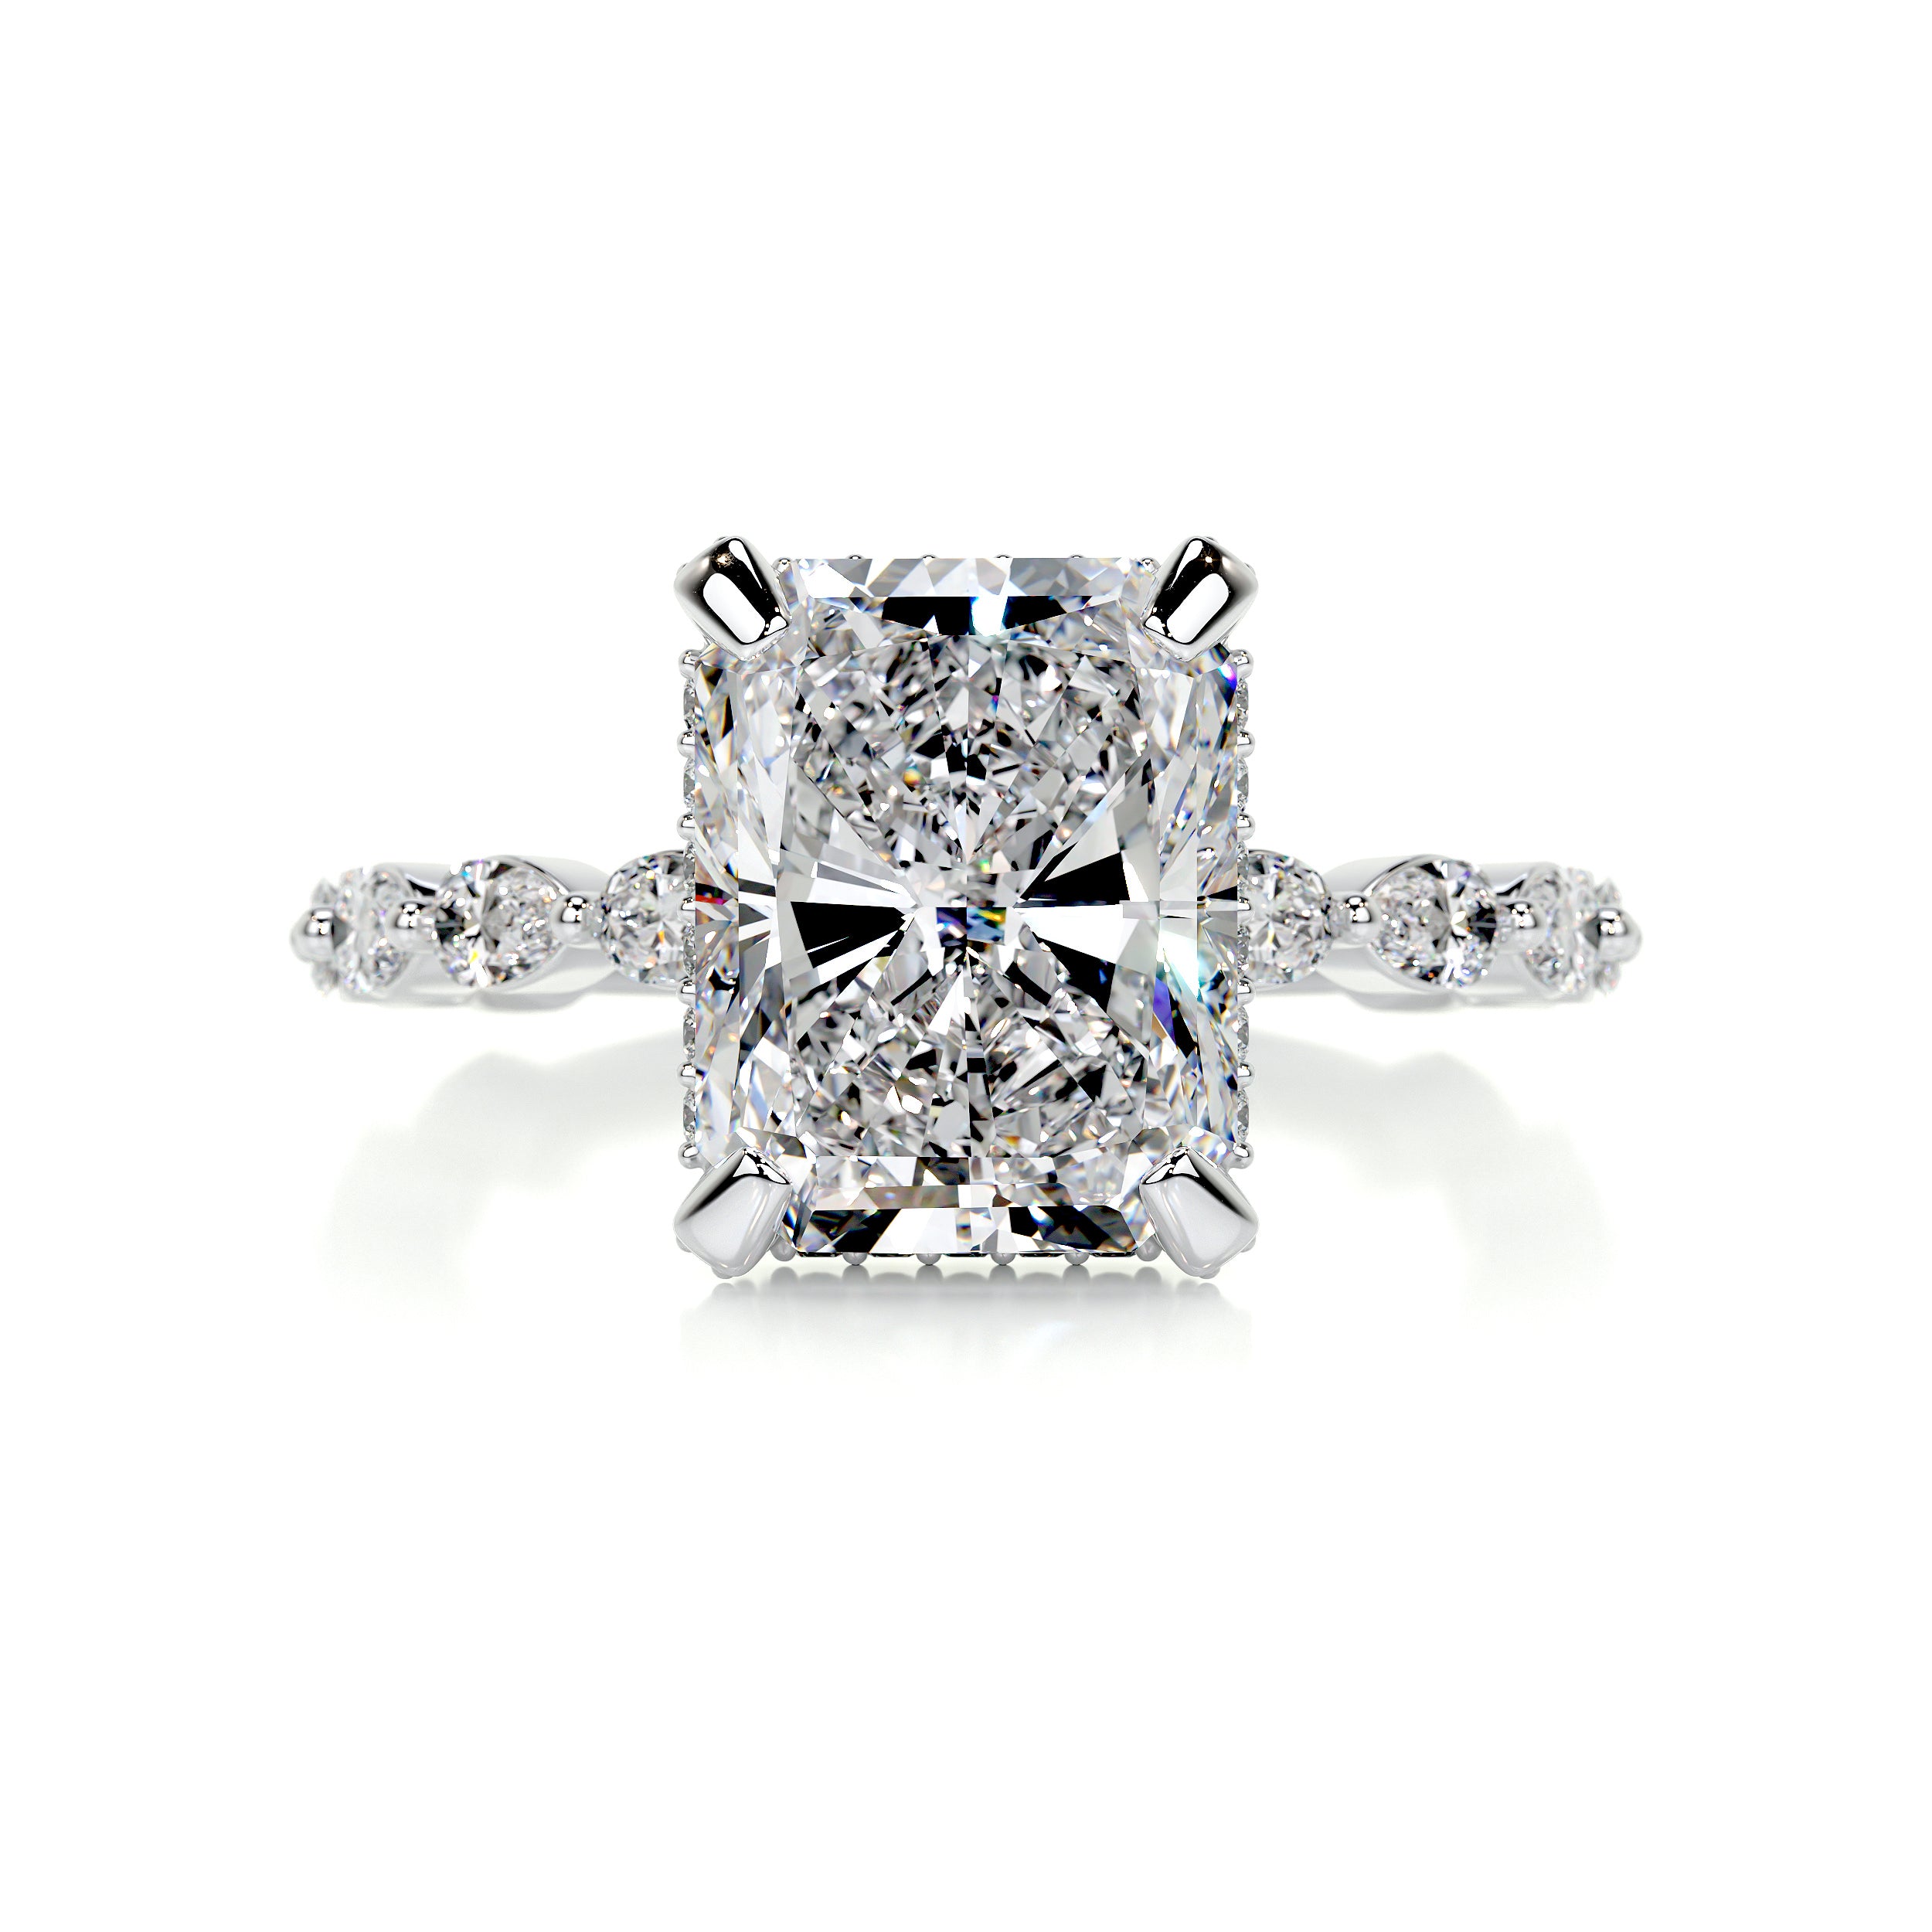 Robin Diamond Engagement Ring   (4.50 Carat) -14K White Gold